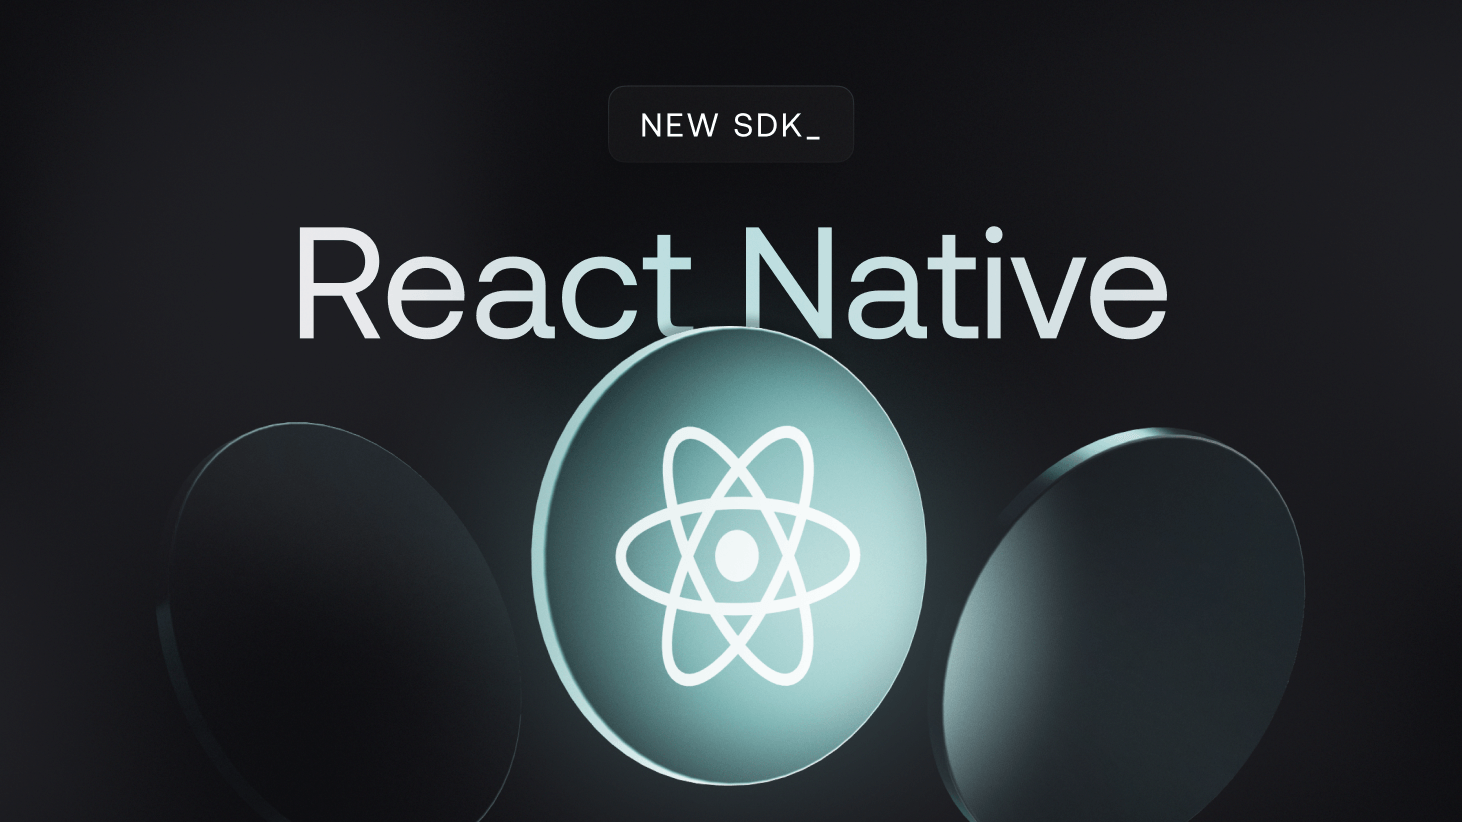 Introducing Appwrite's React Native SDK in open beta